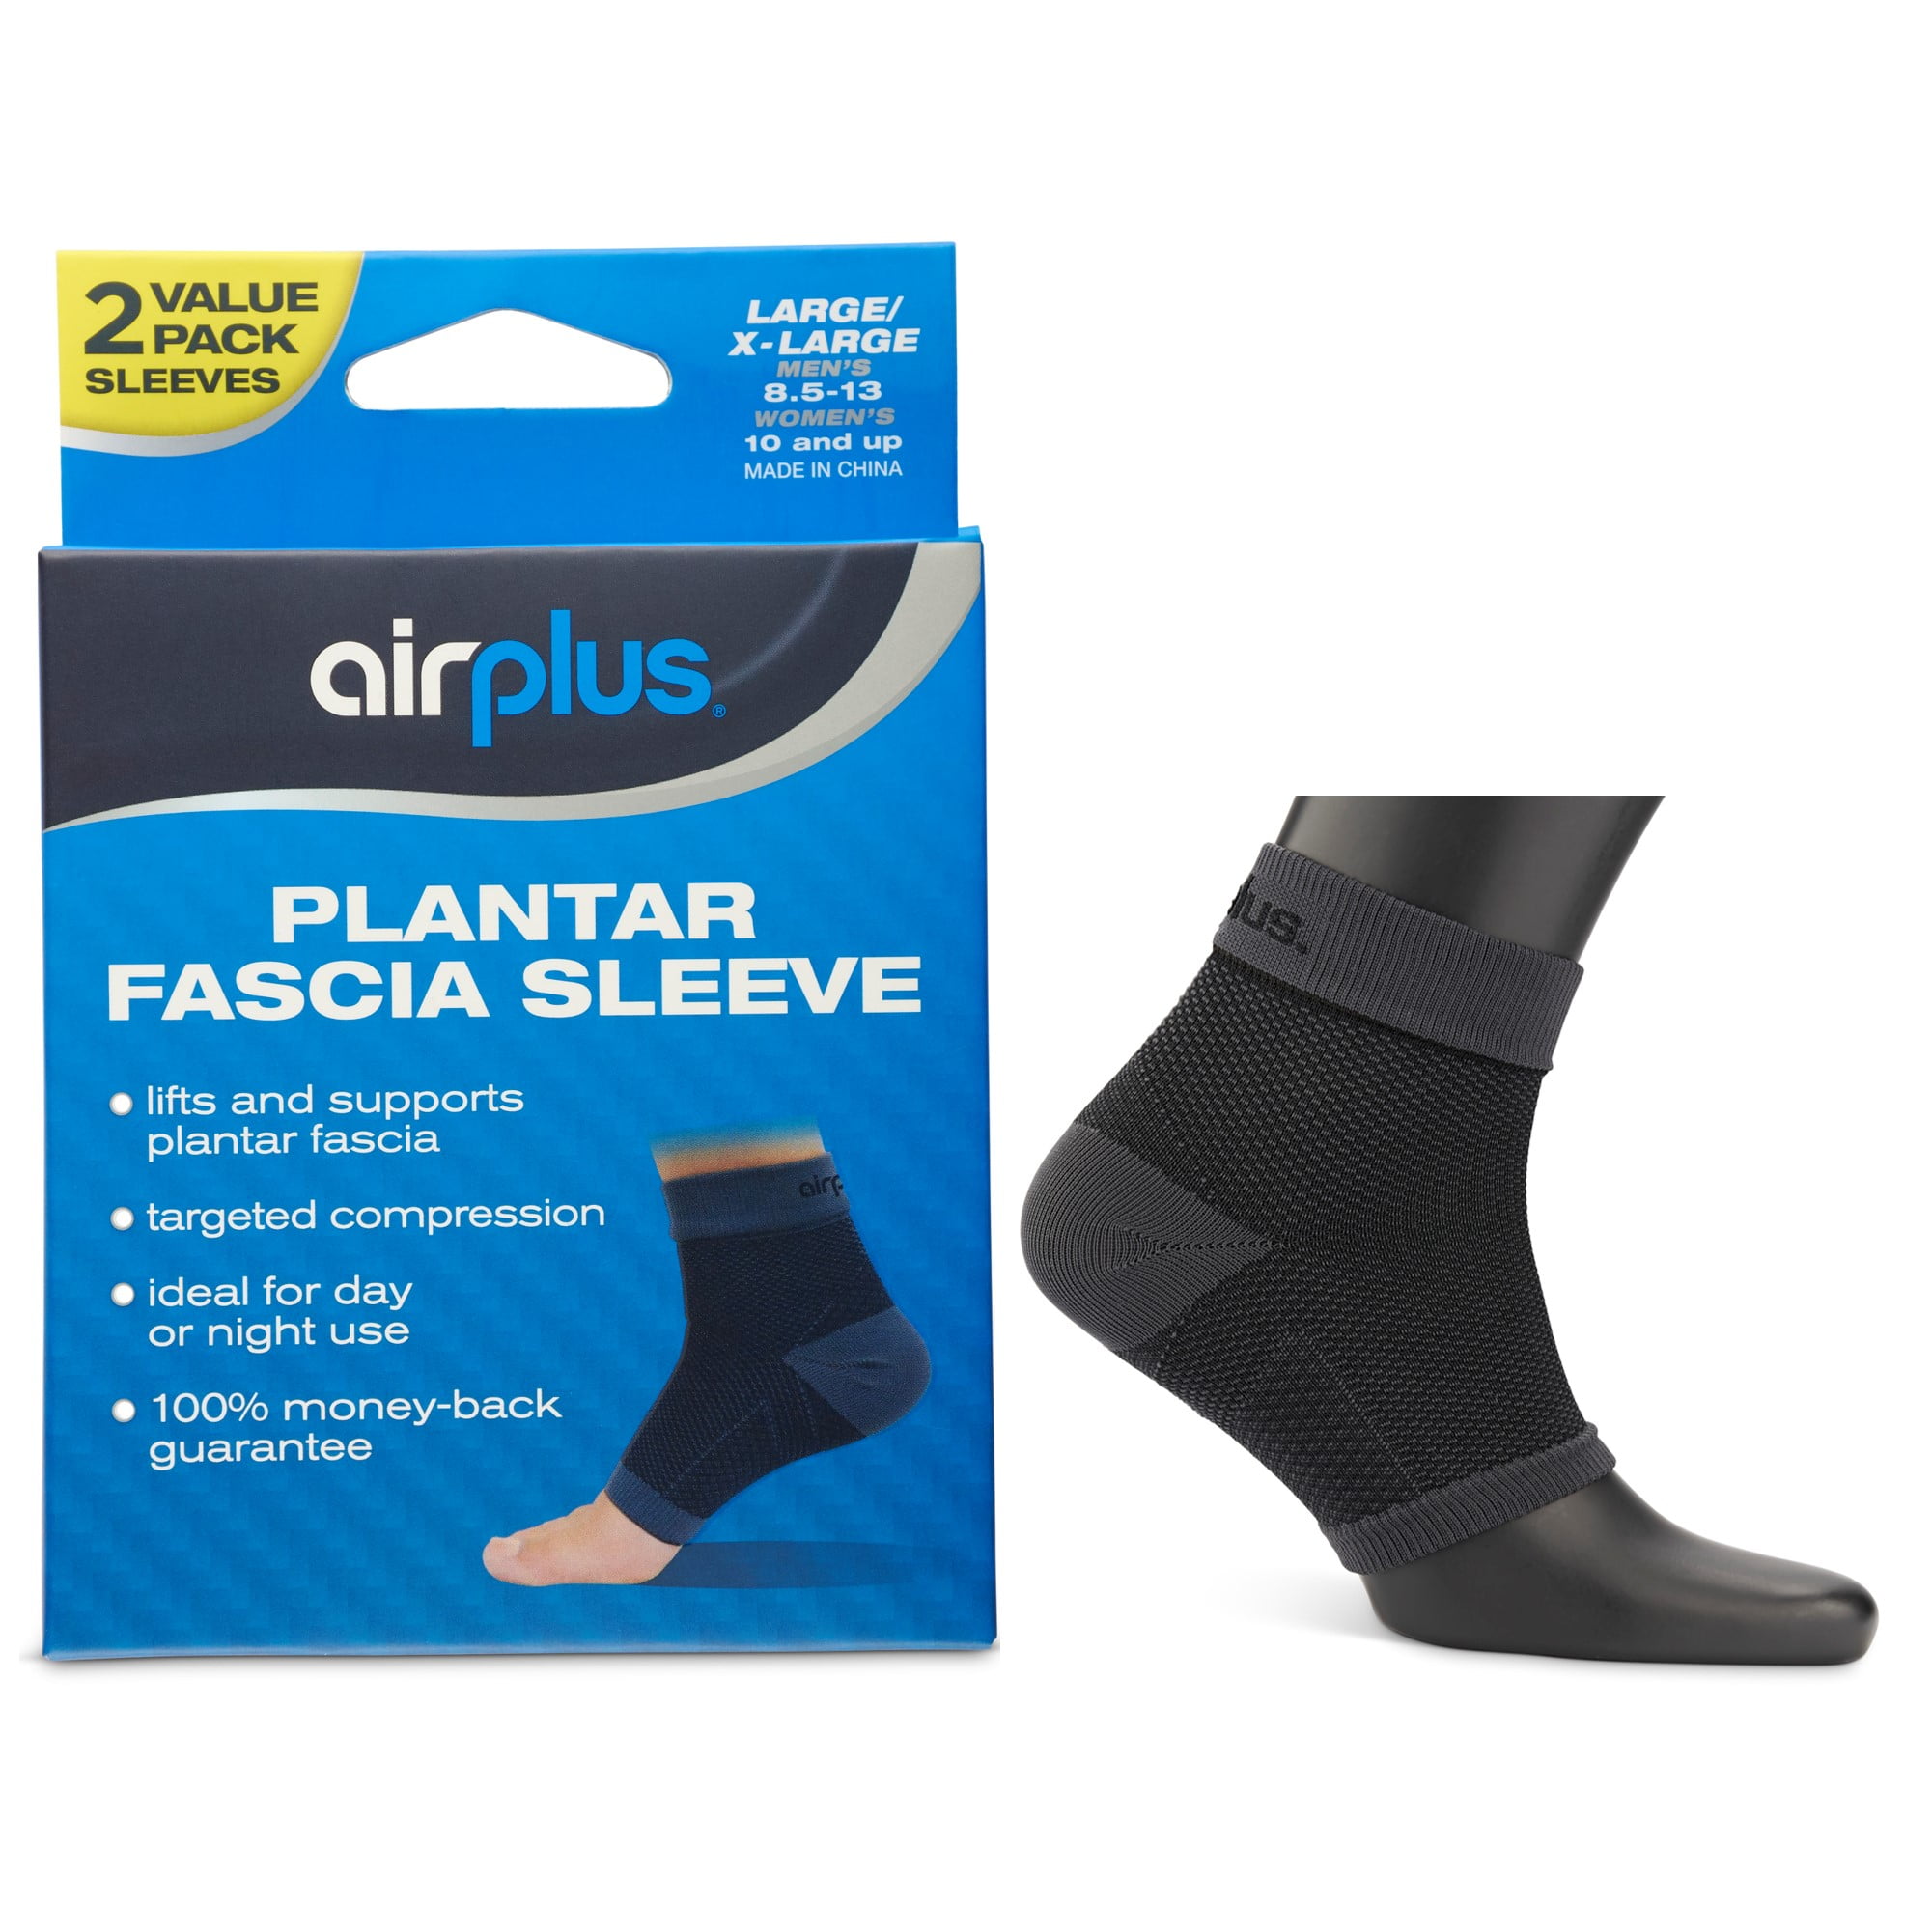 Airplus Plantar Fascia Sleeve Size L/XL - Walmart.com